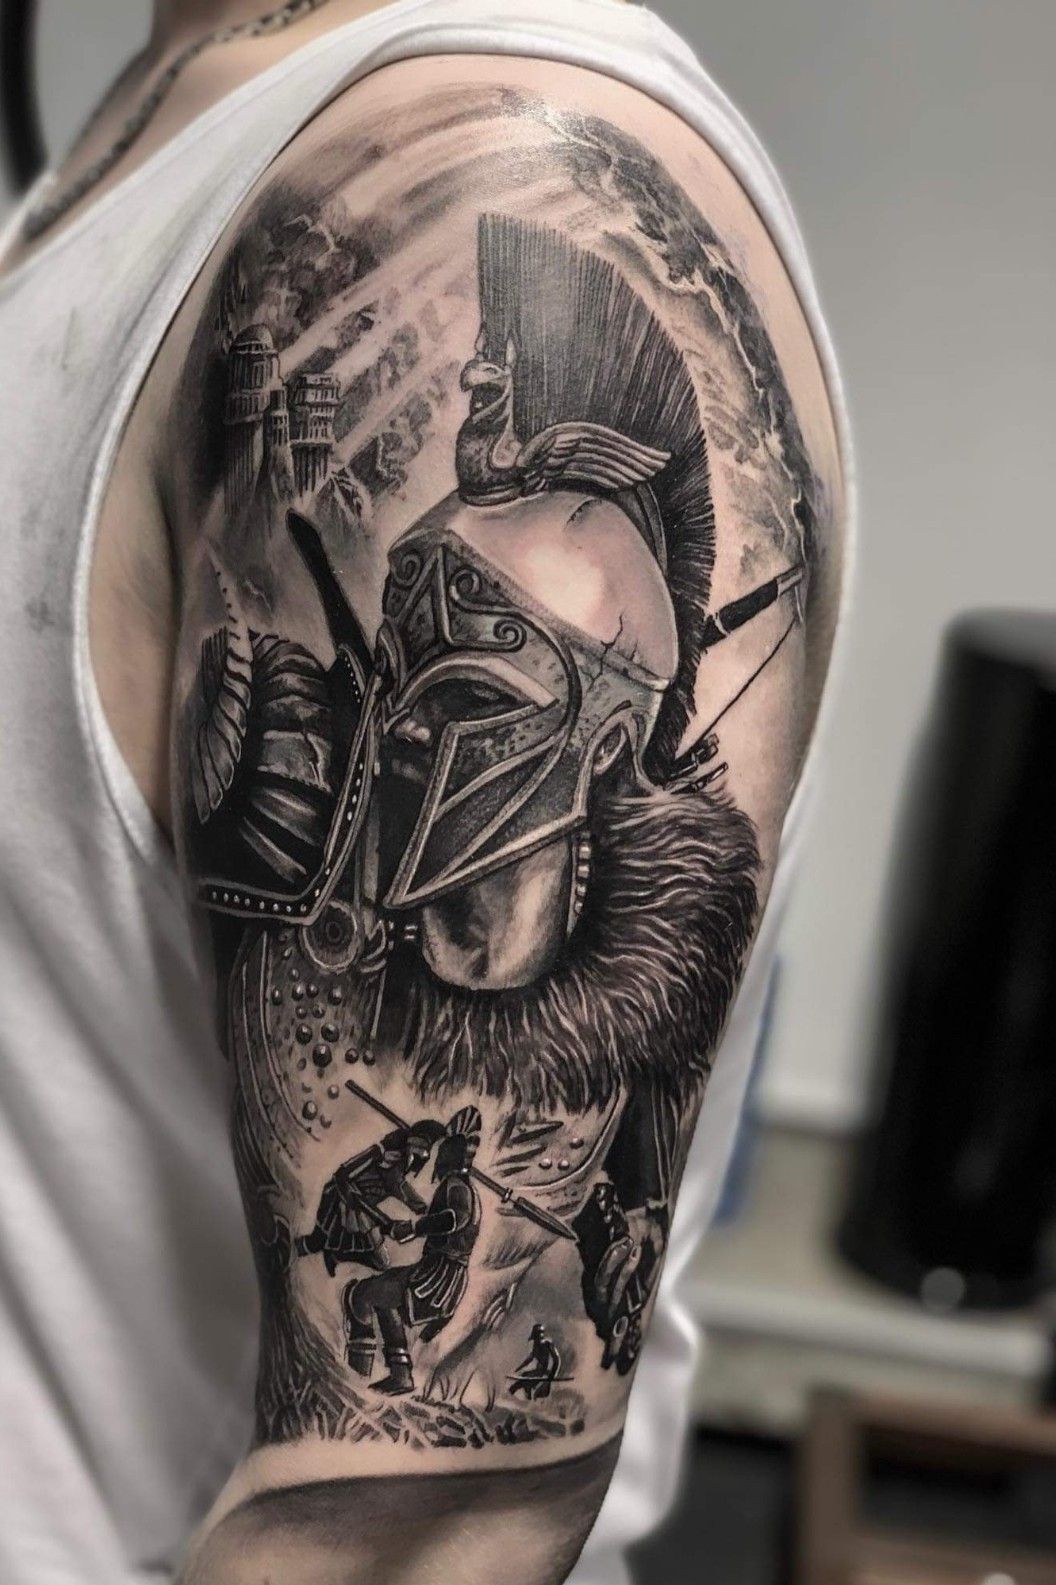 Gladiator tattoos